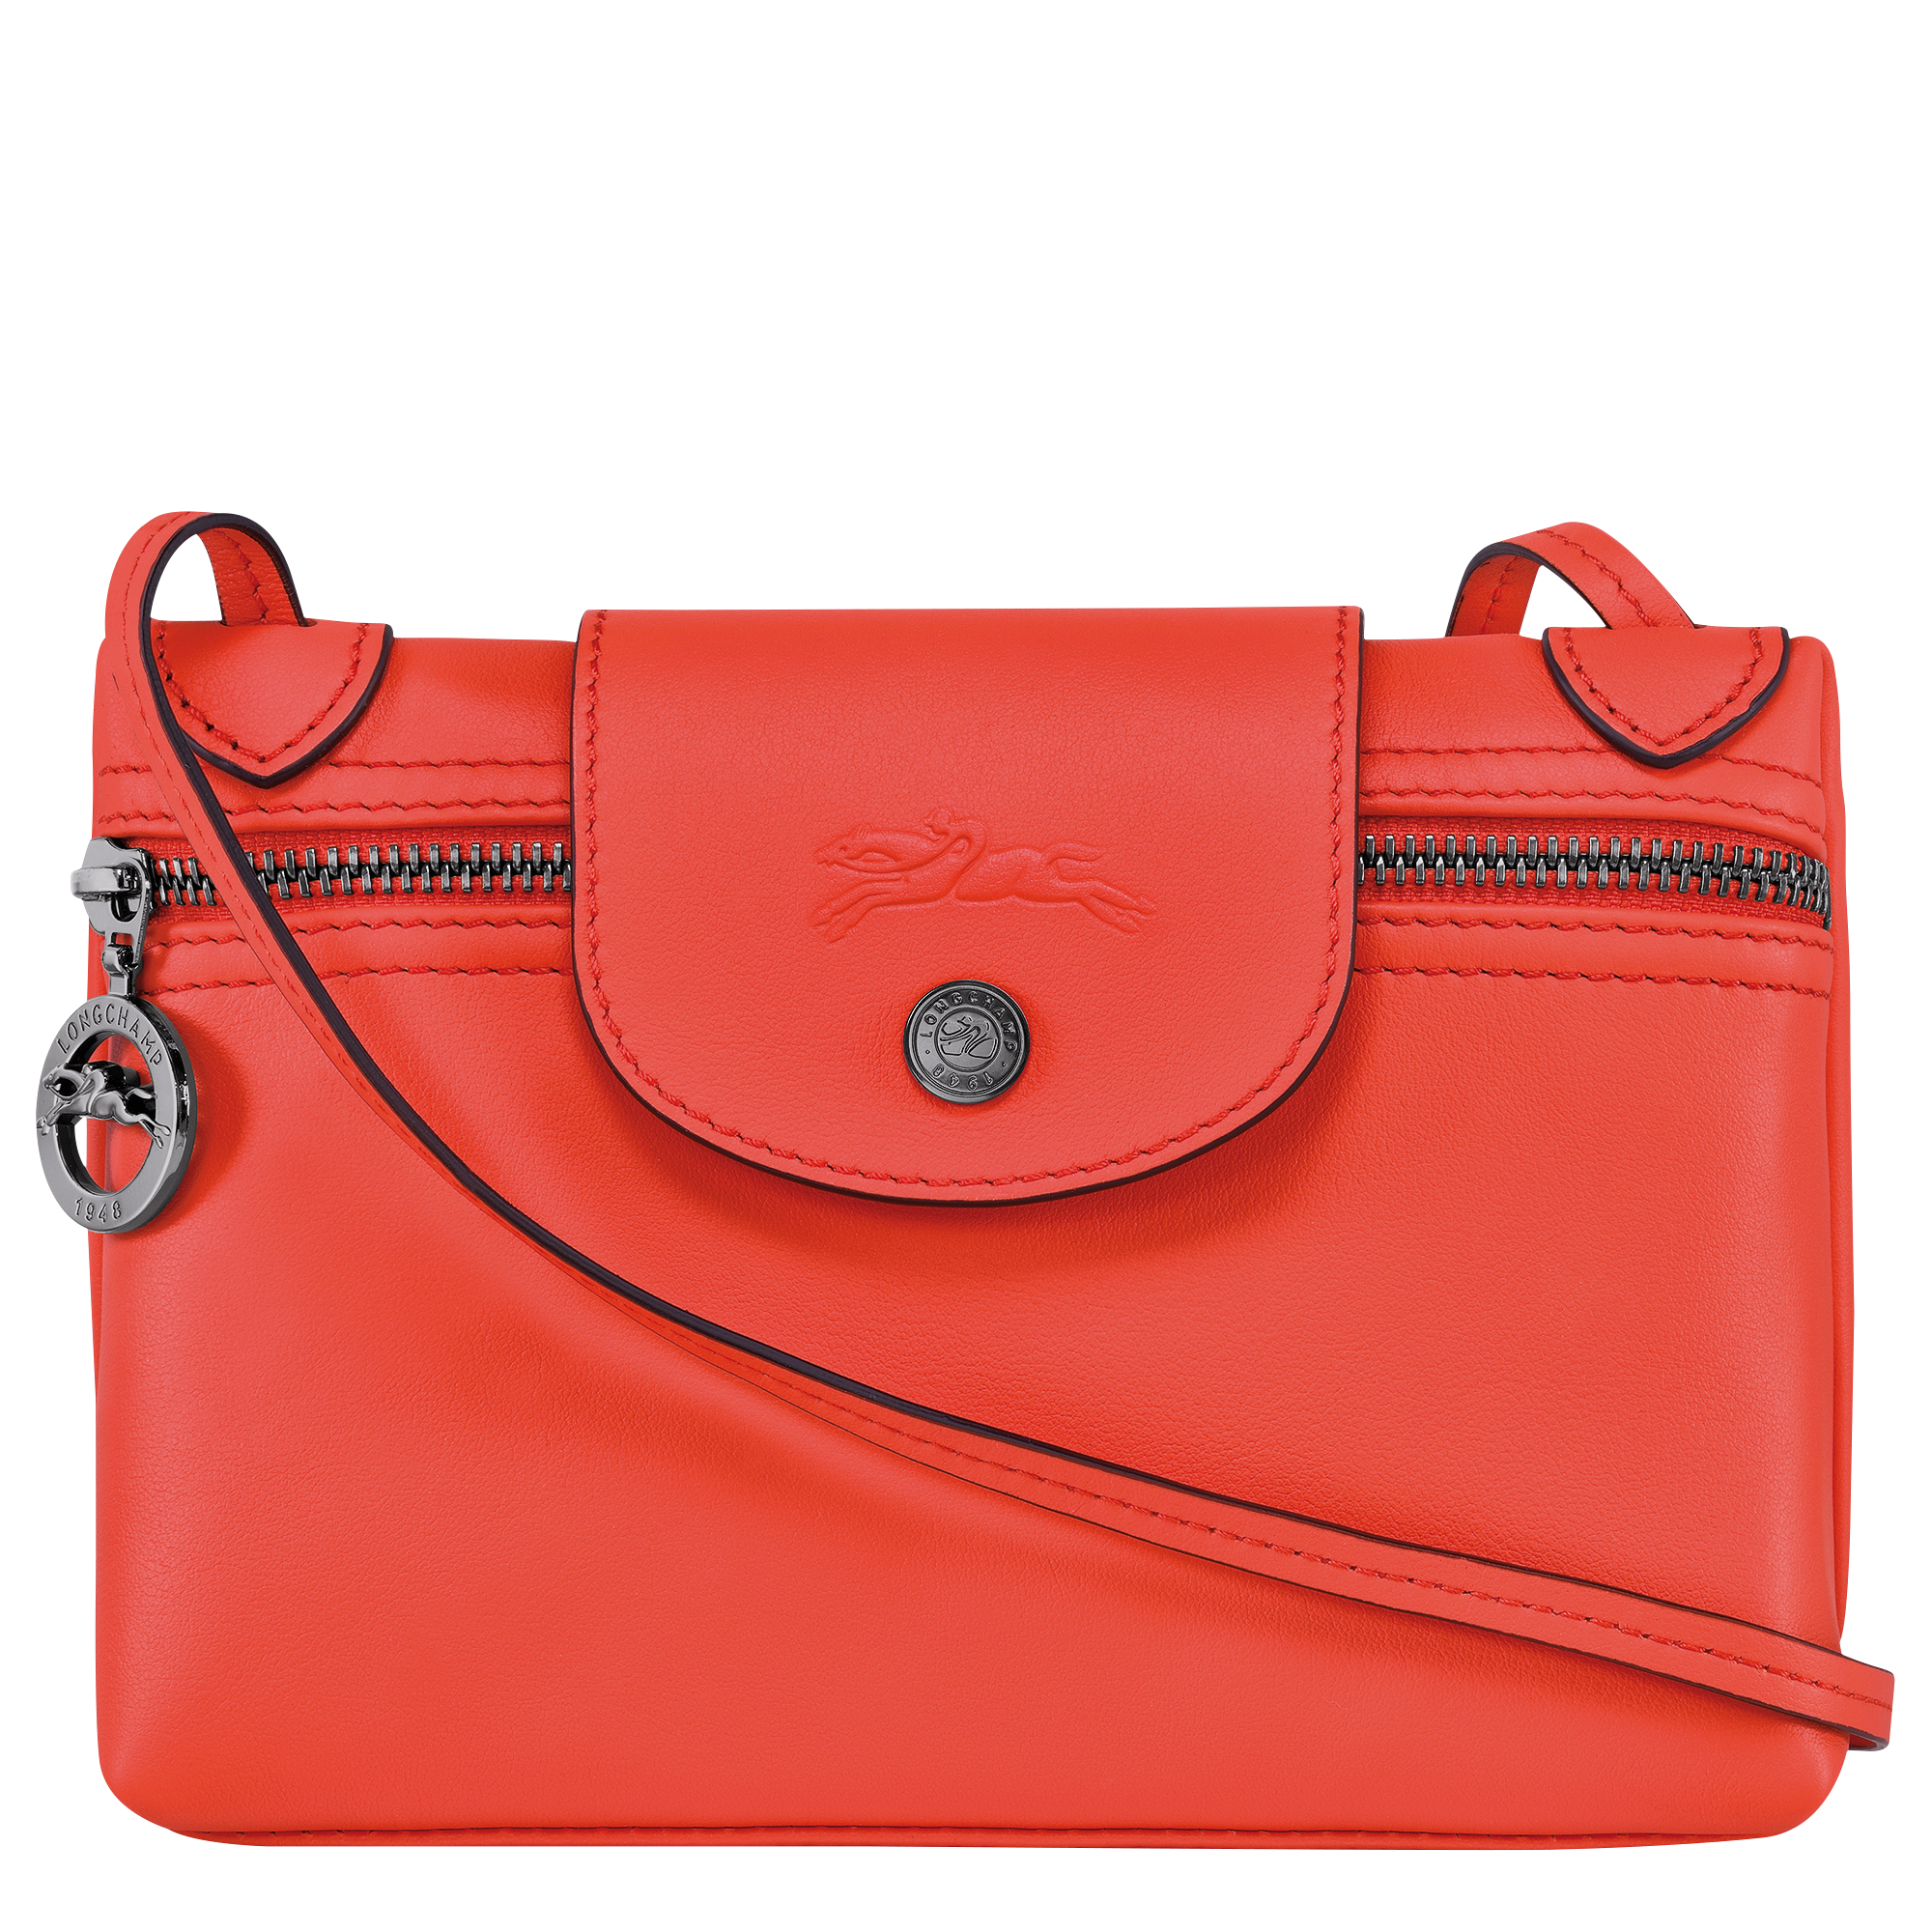 New Latest LONGCHAMP XS Trot orange leather mini crossbody bag w/ 2 handles